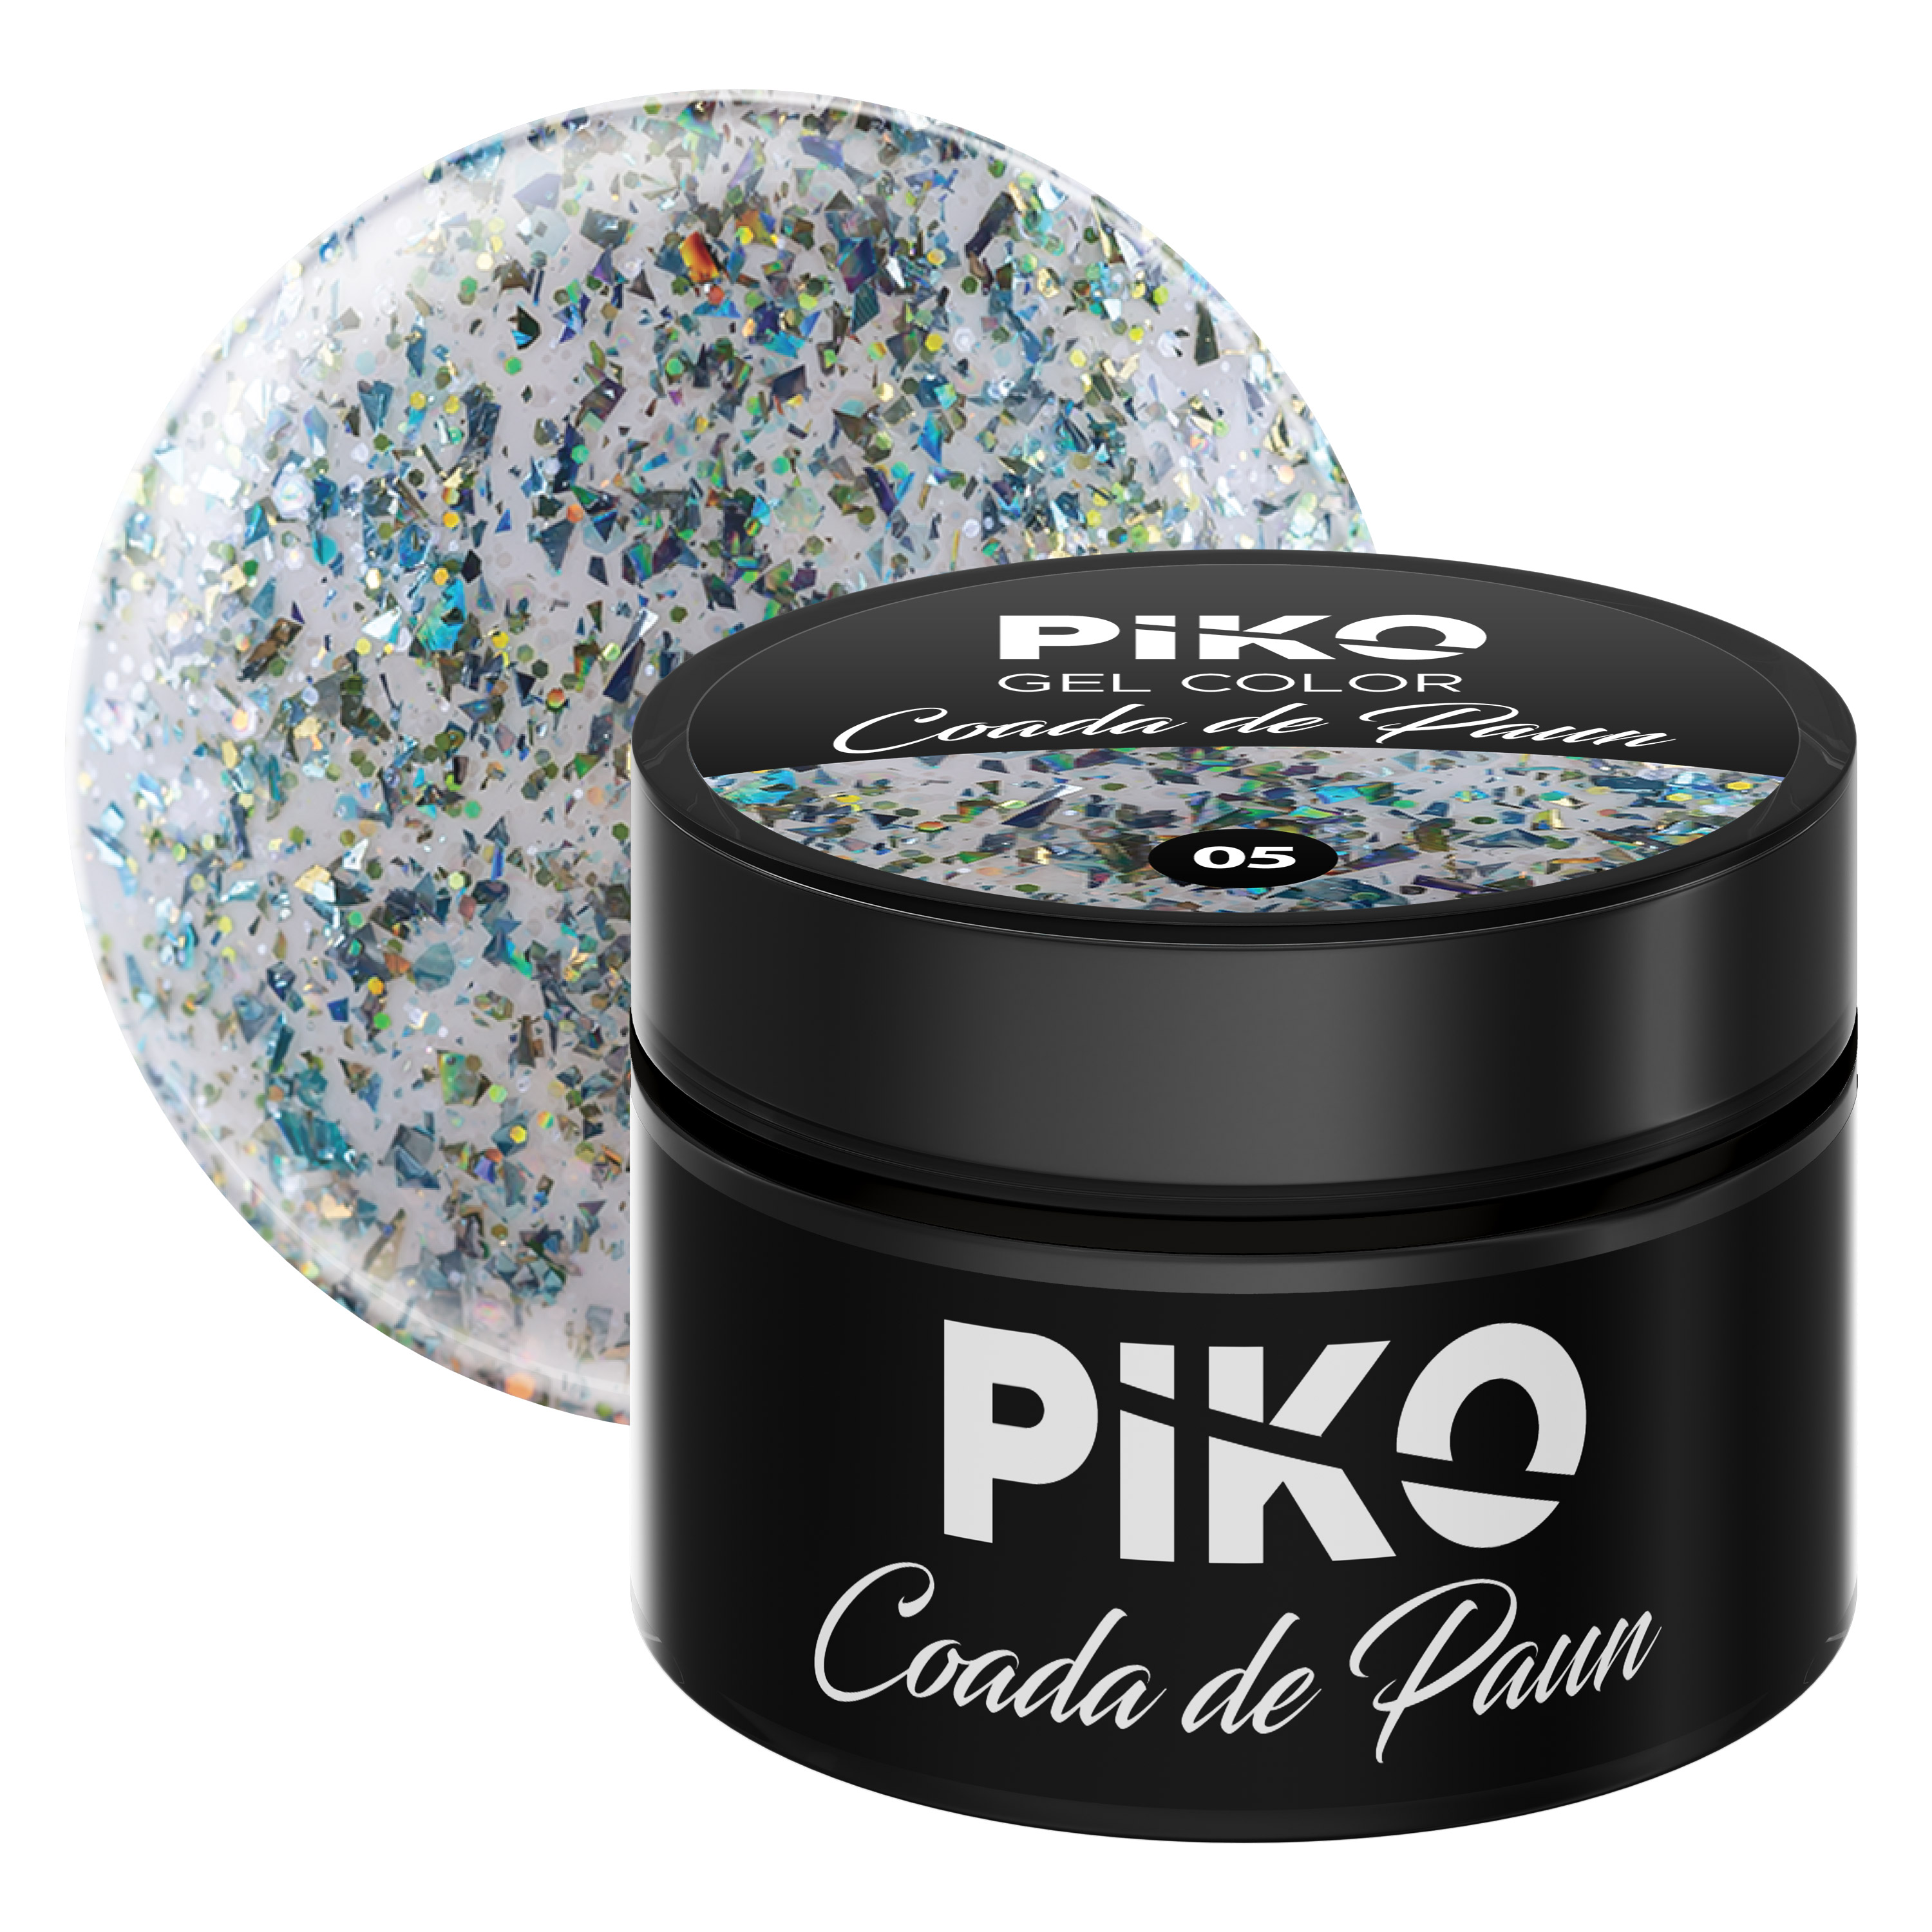 Gel UV color Piko, Coada de paun, 5g, model 05